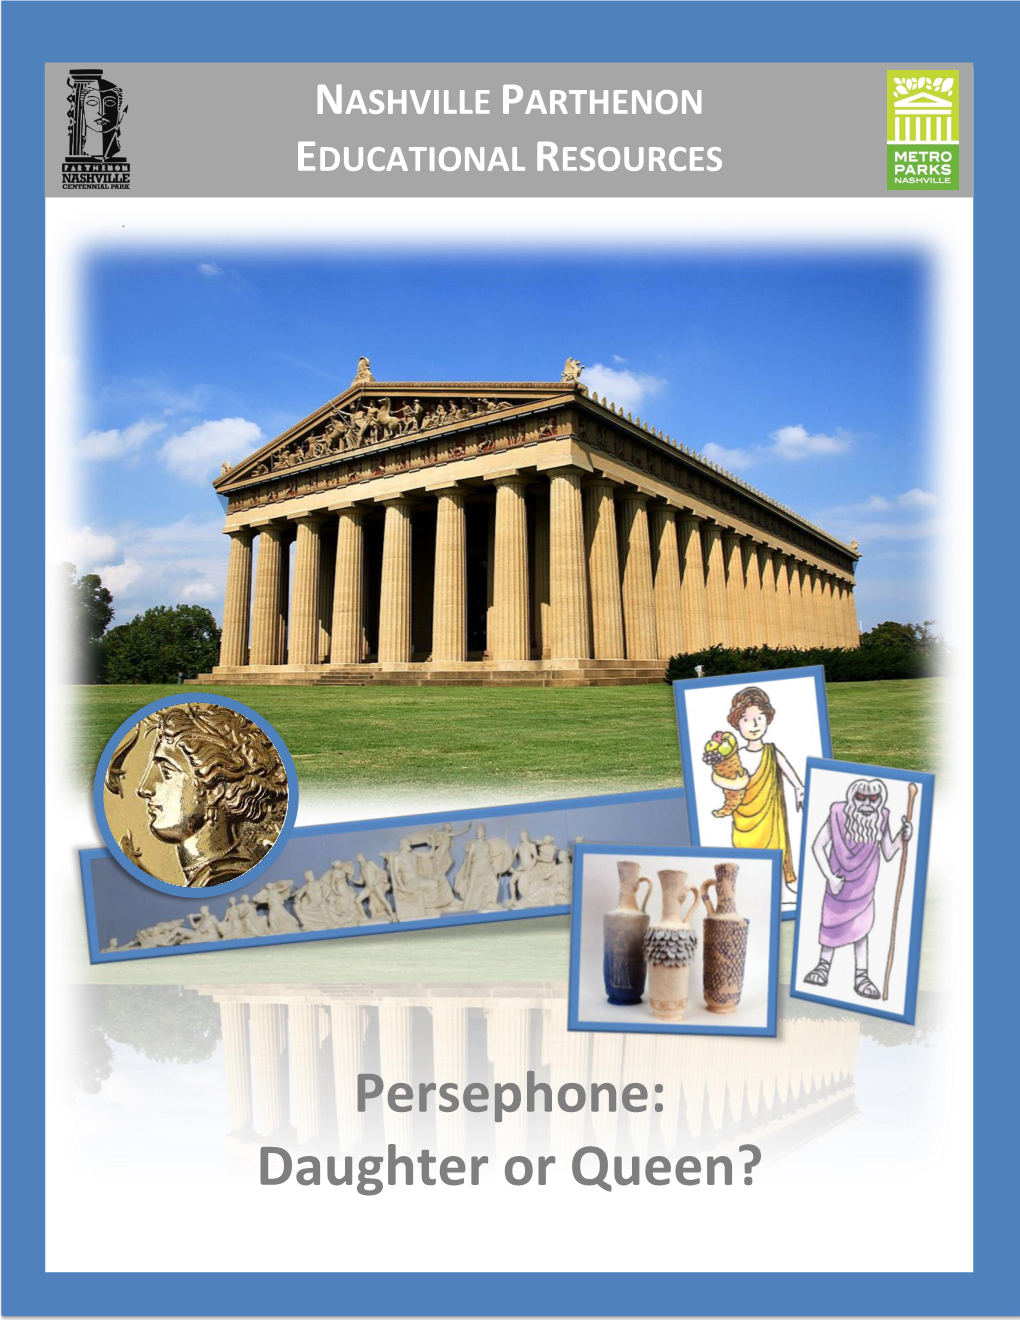 Nashville Parthenon Educational Resources